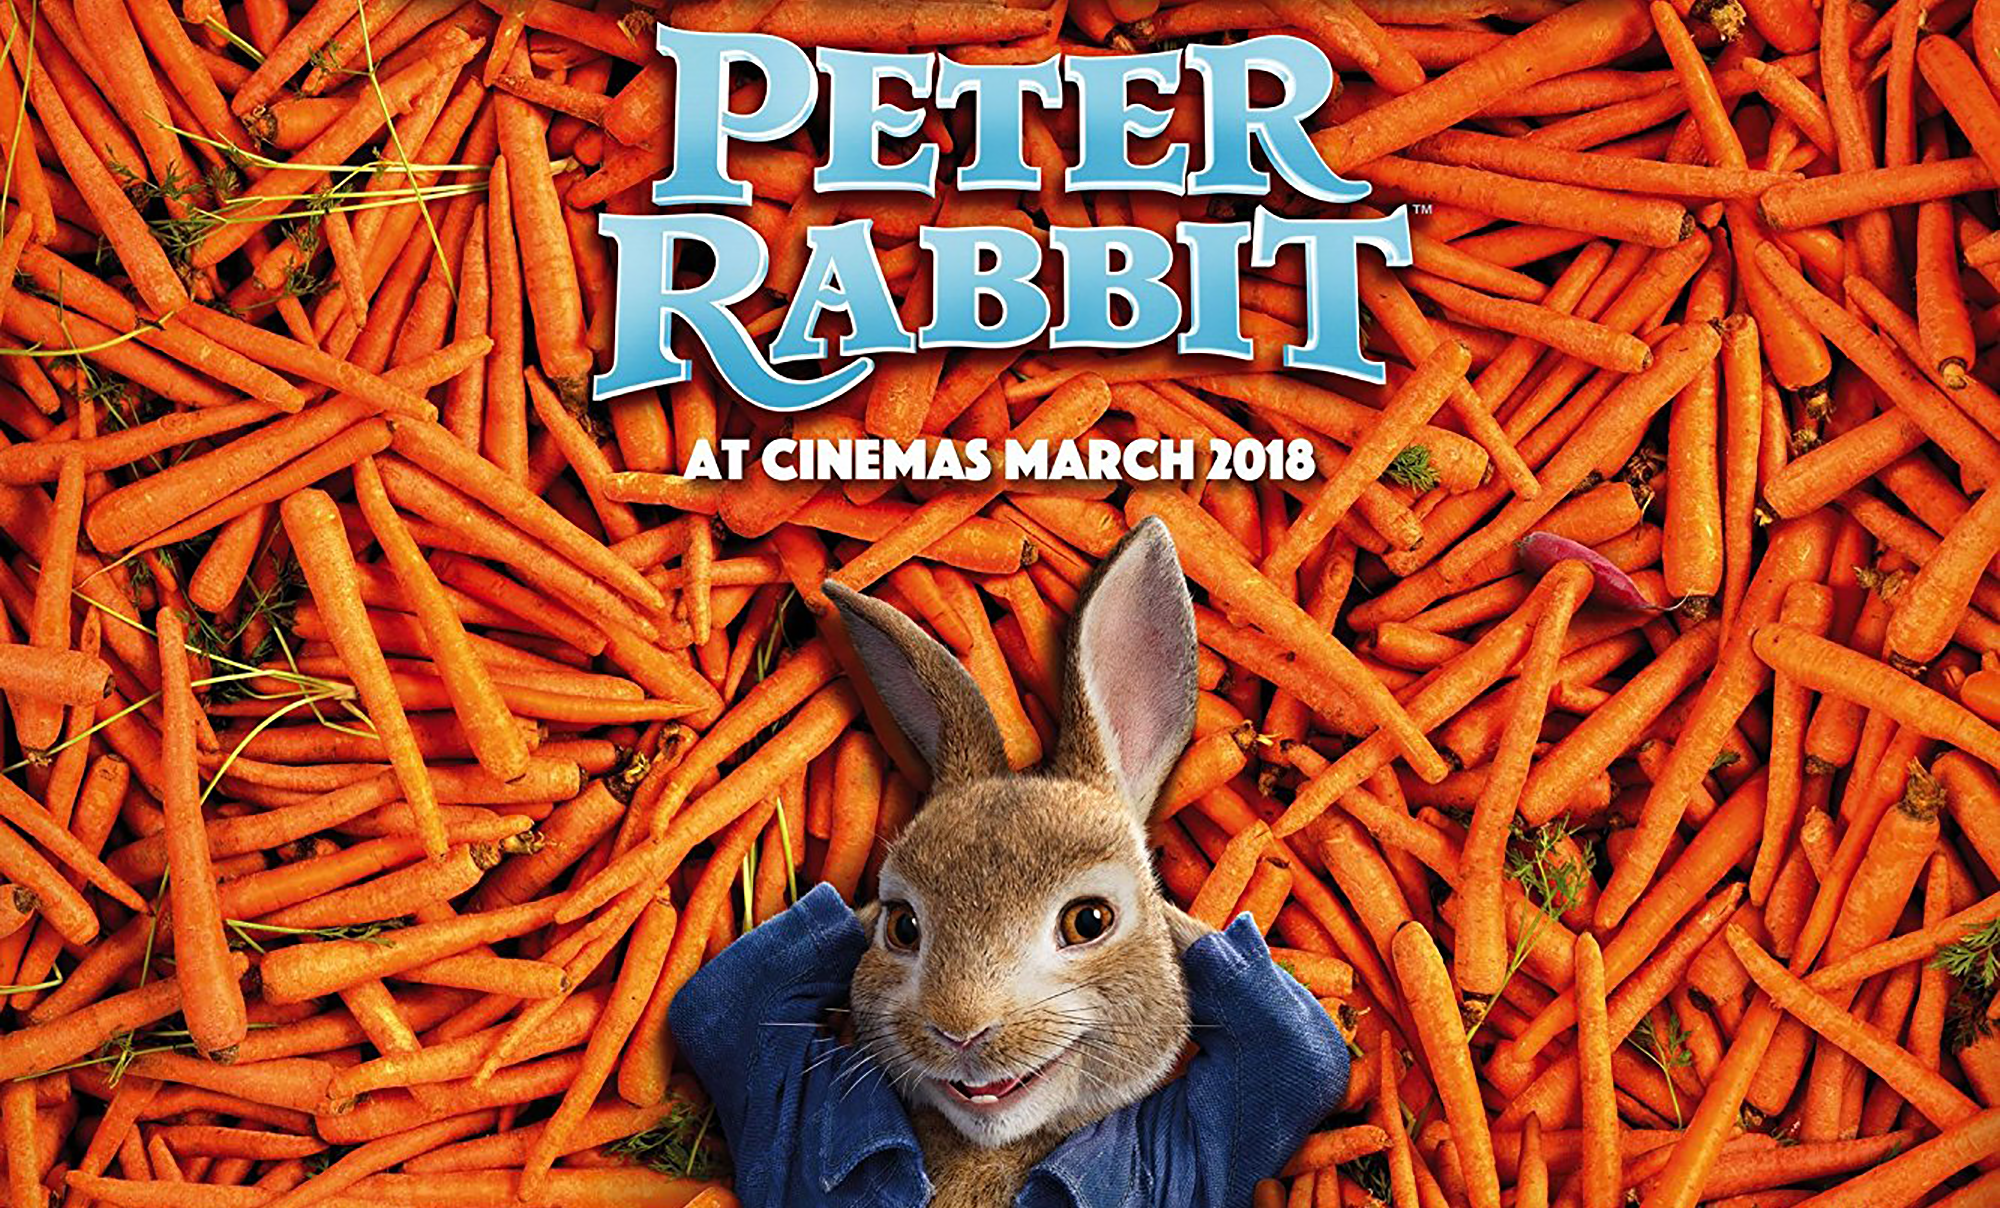 Peter Rabbit film poster, 2018